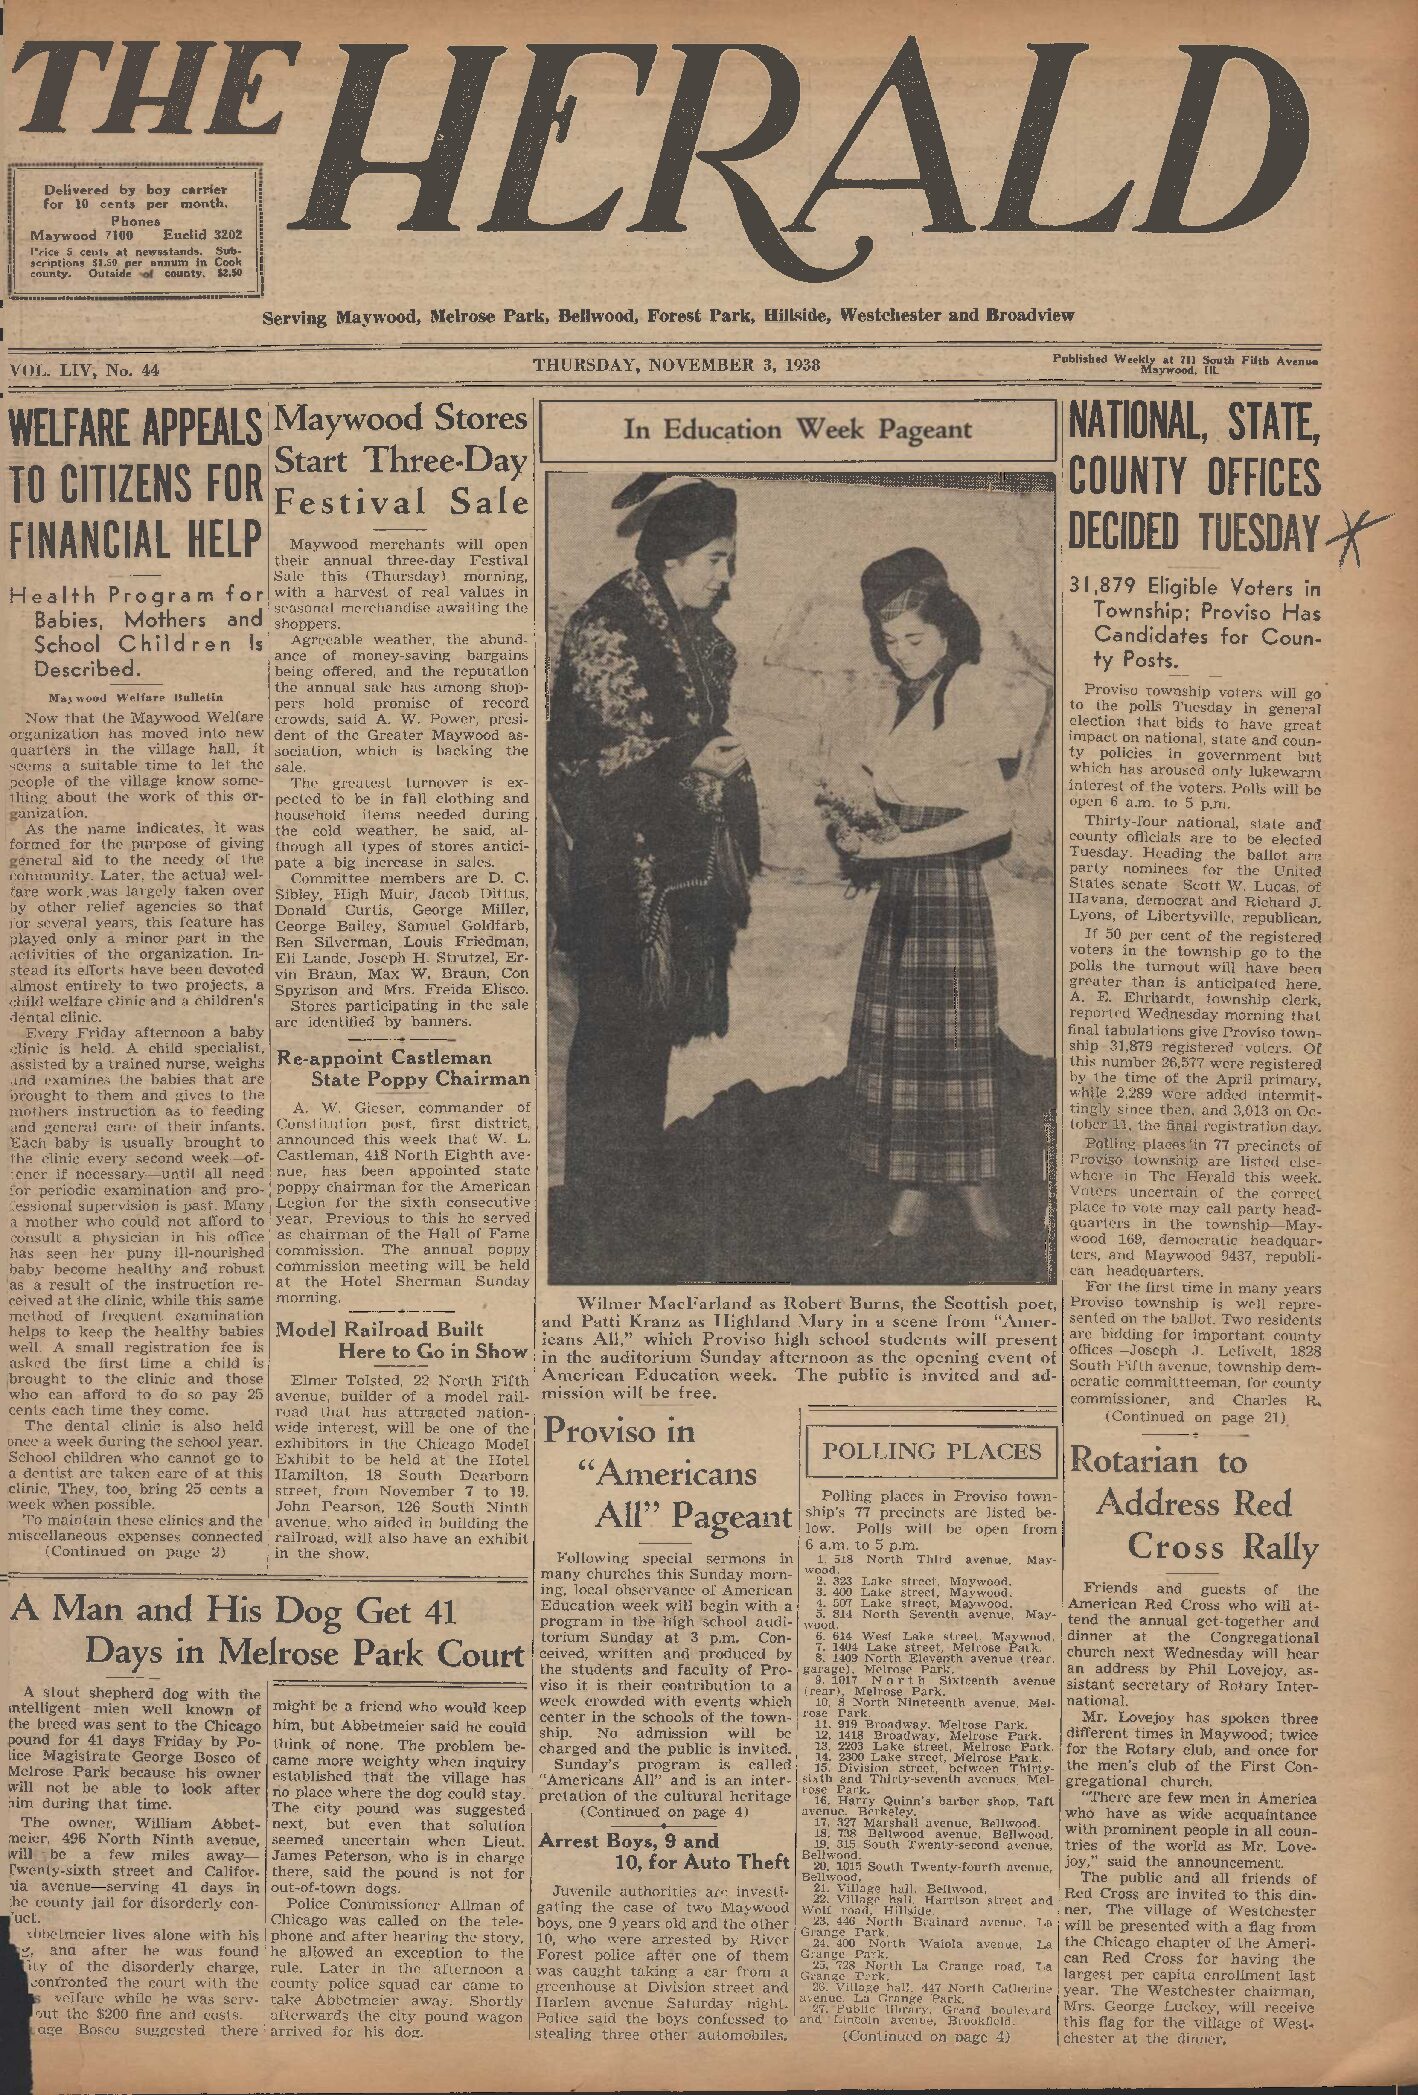 The Herald – 19381103